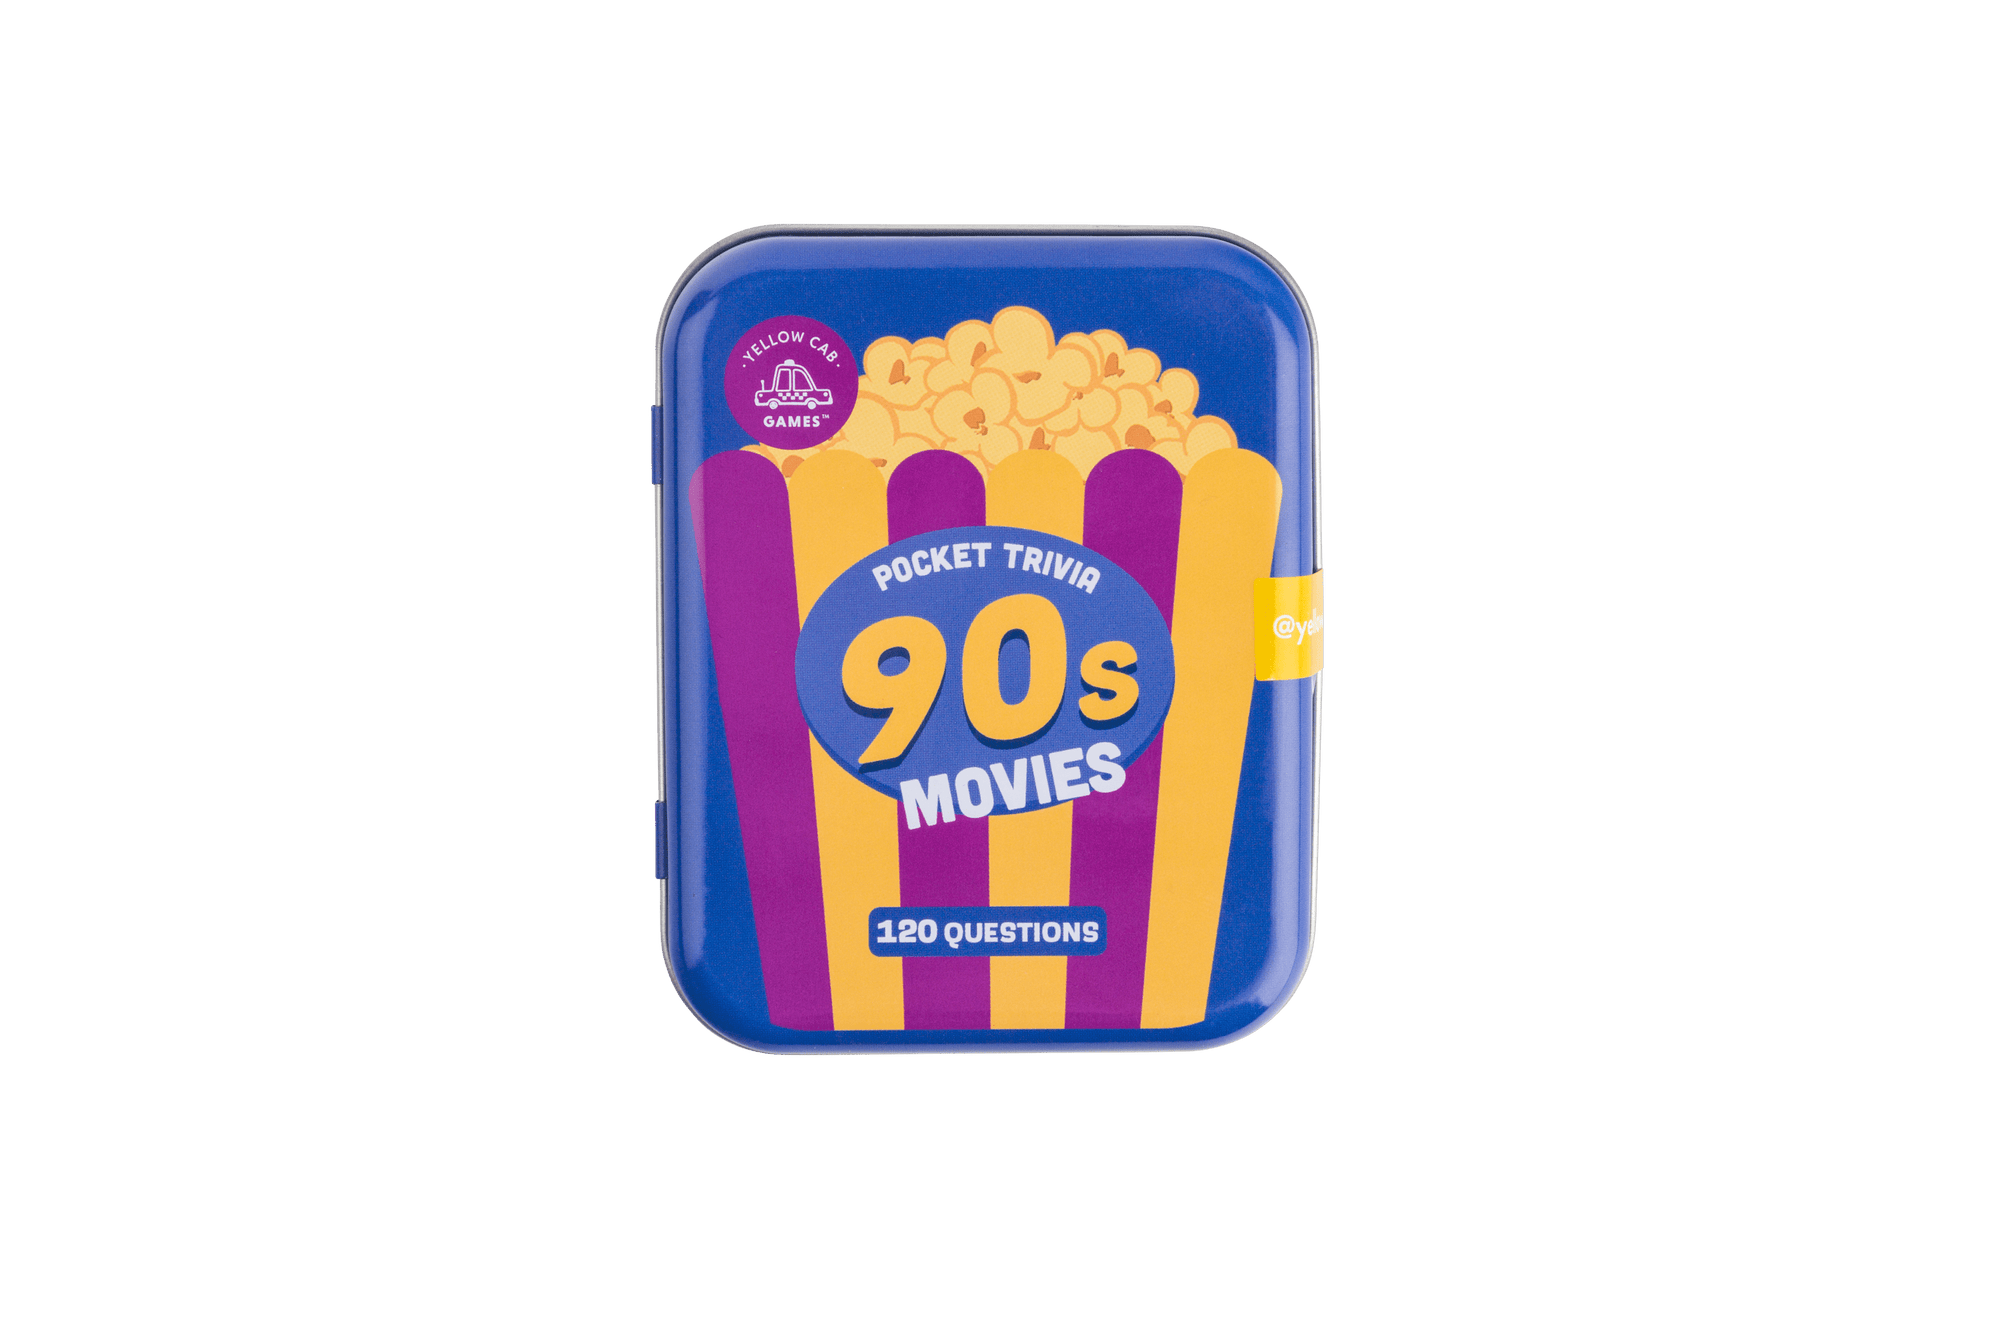 90s Movies Pocket Trivia